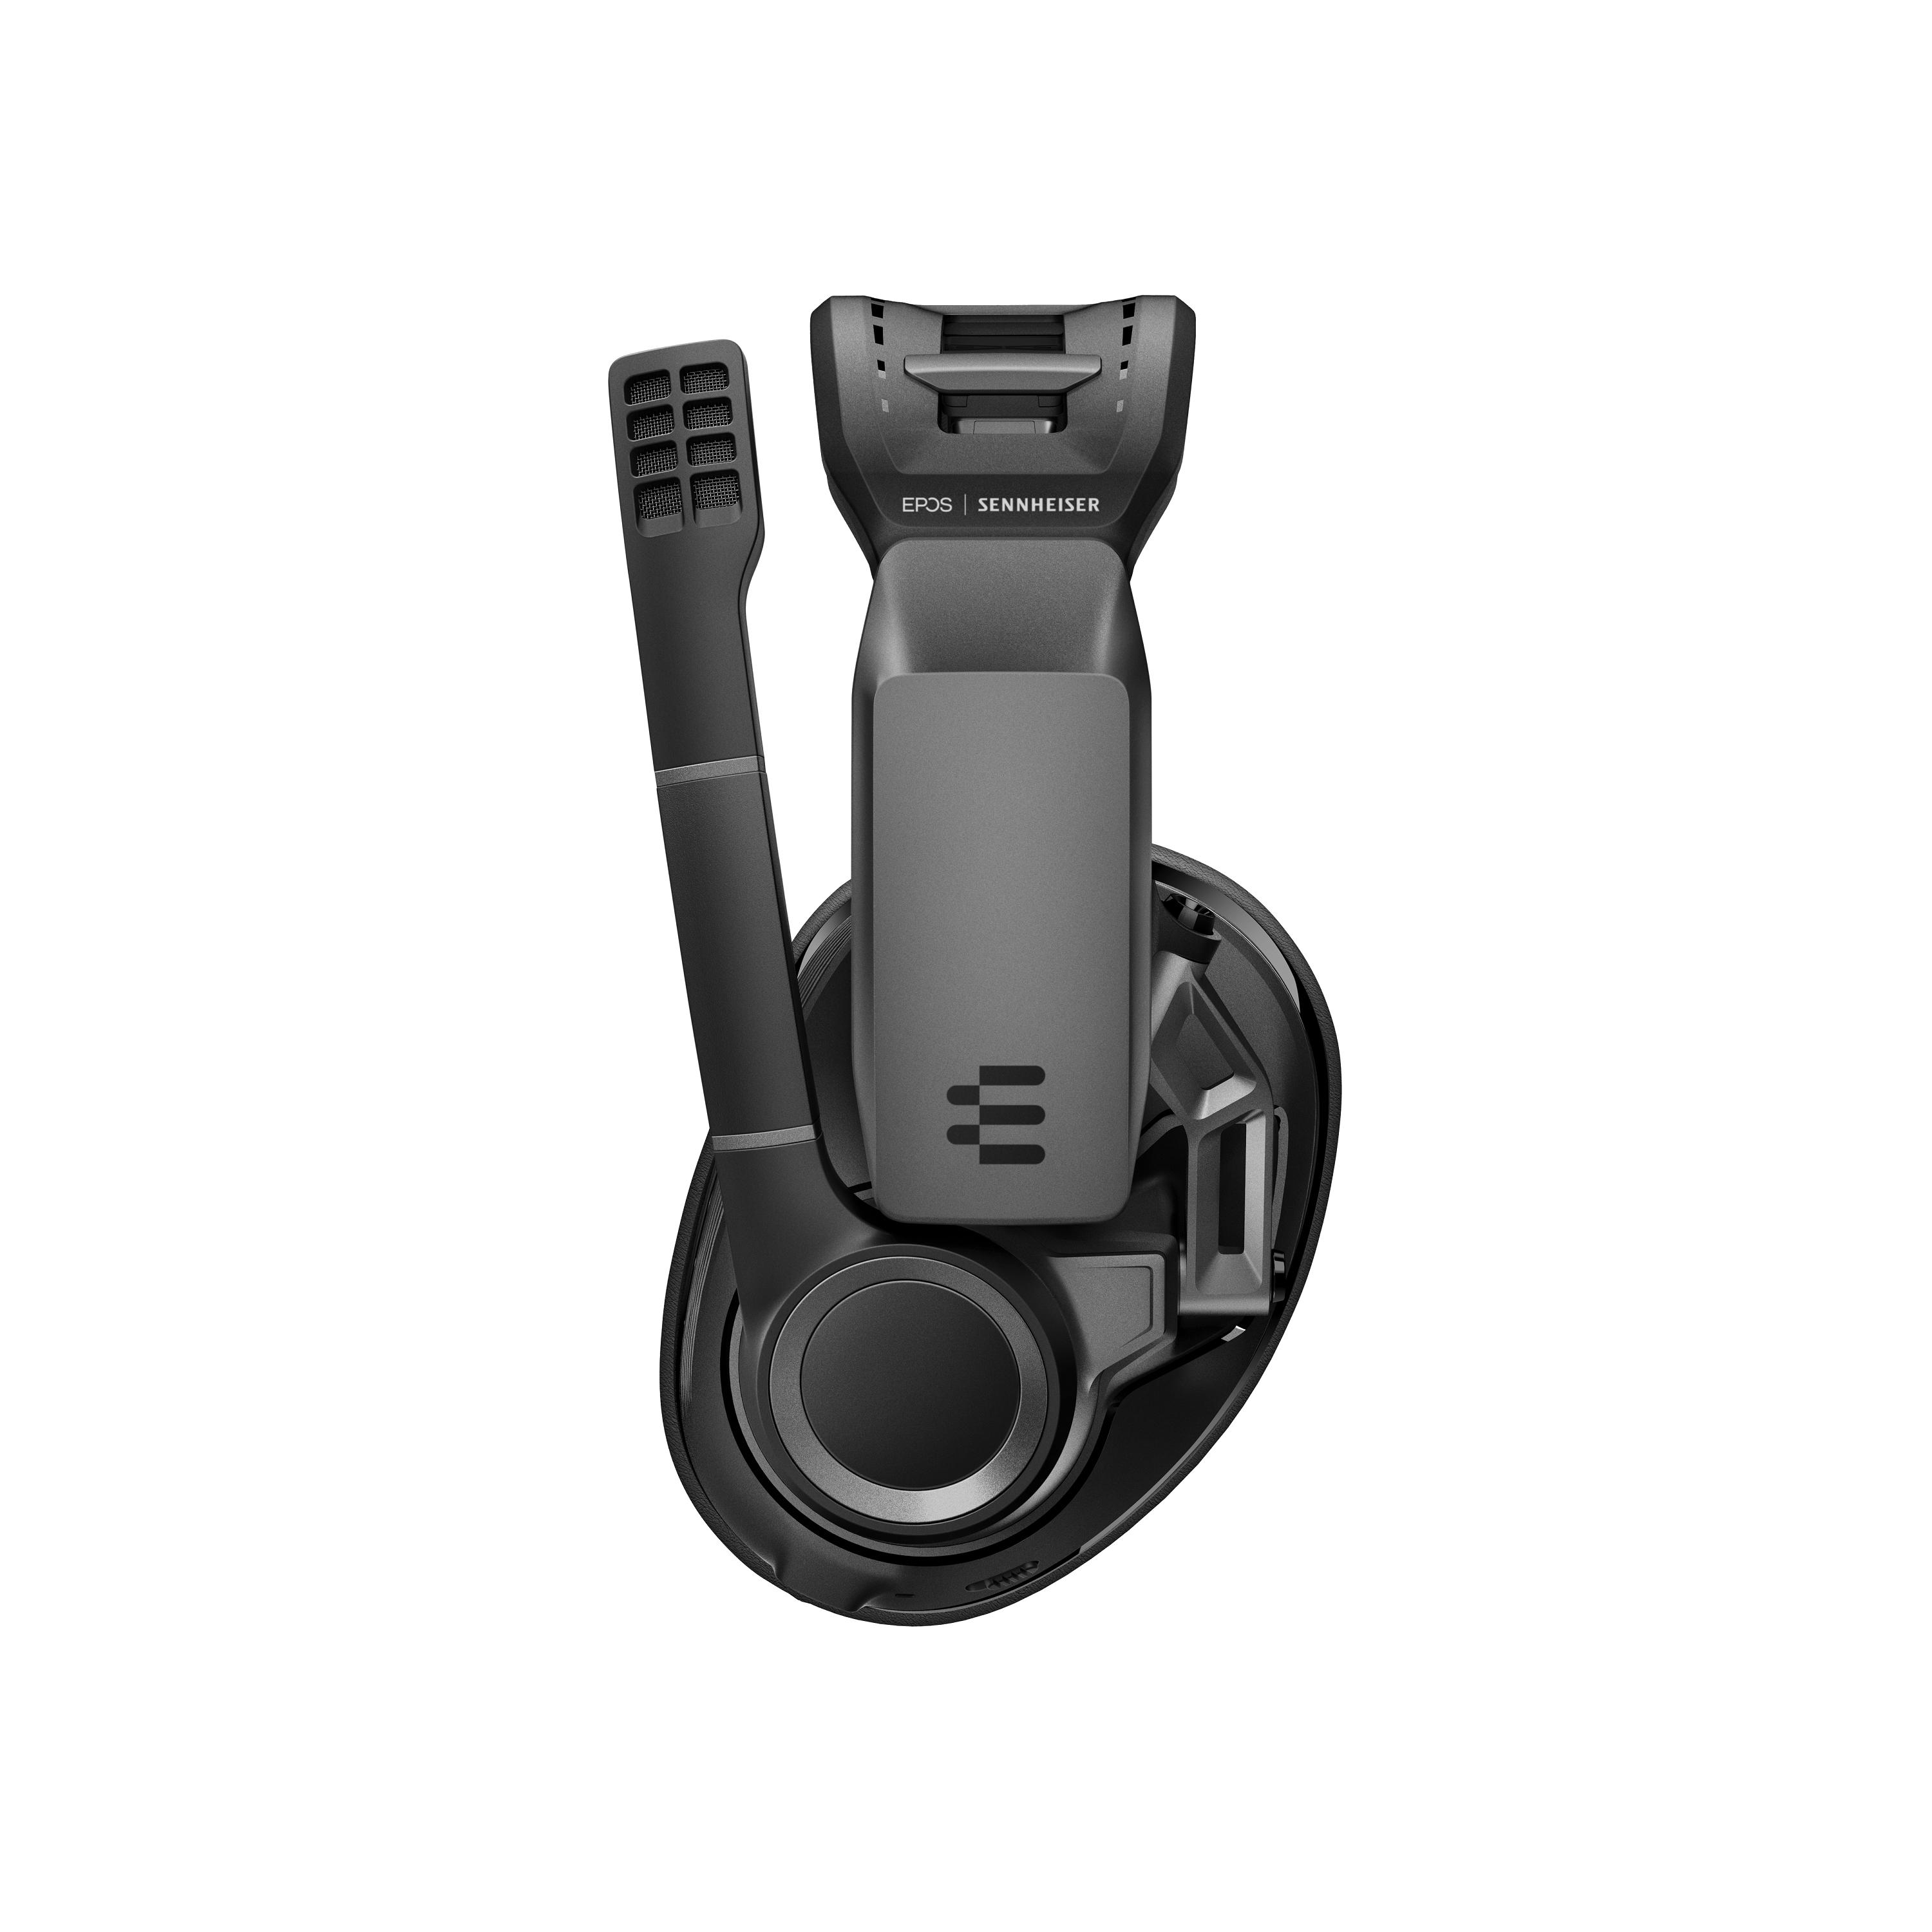 Schwarz Gaming EPOS Bluetooth Headset GSP Over-ear 670,